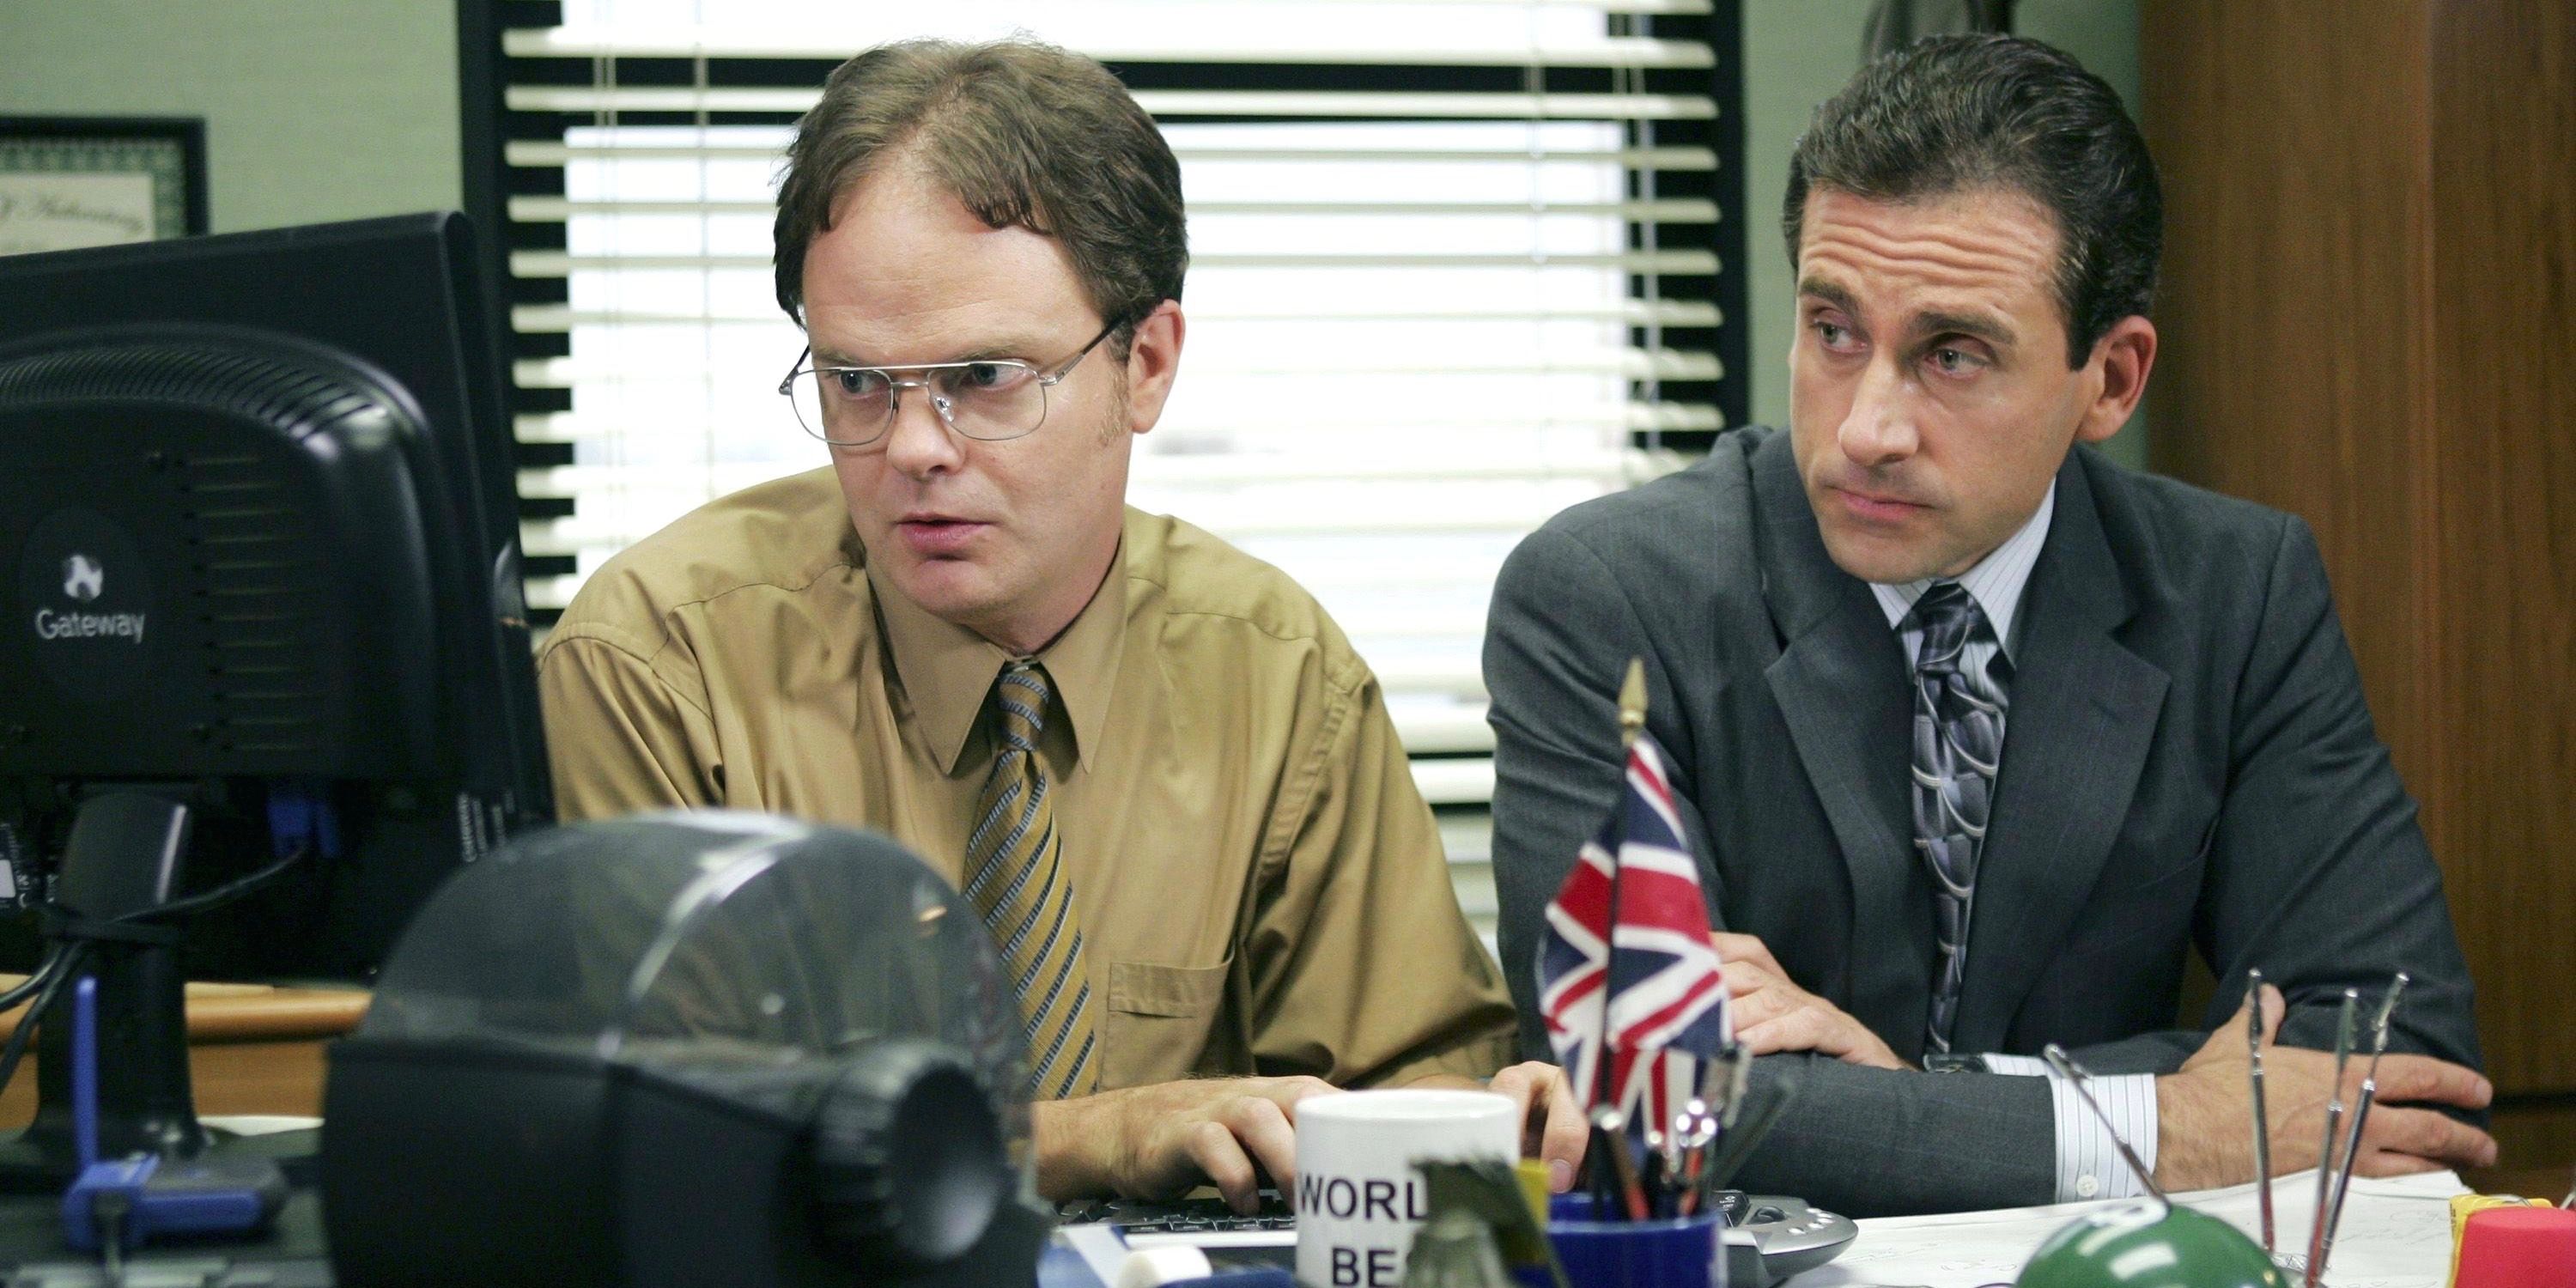 Steve Carell and Rainn Wilson as Michael Scott and Dwight in The Office